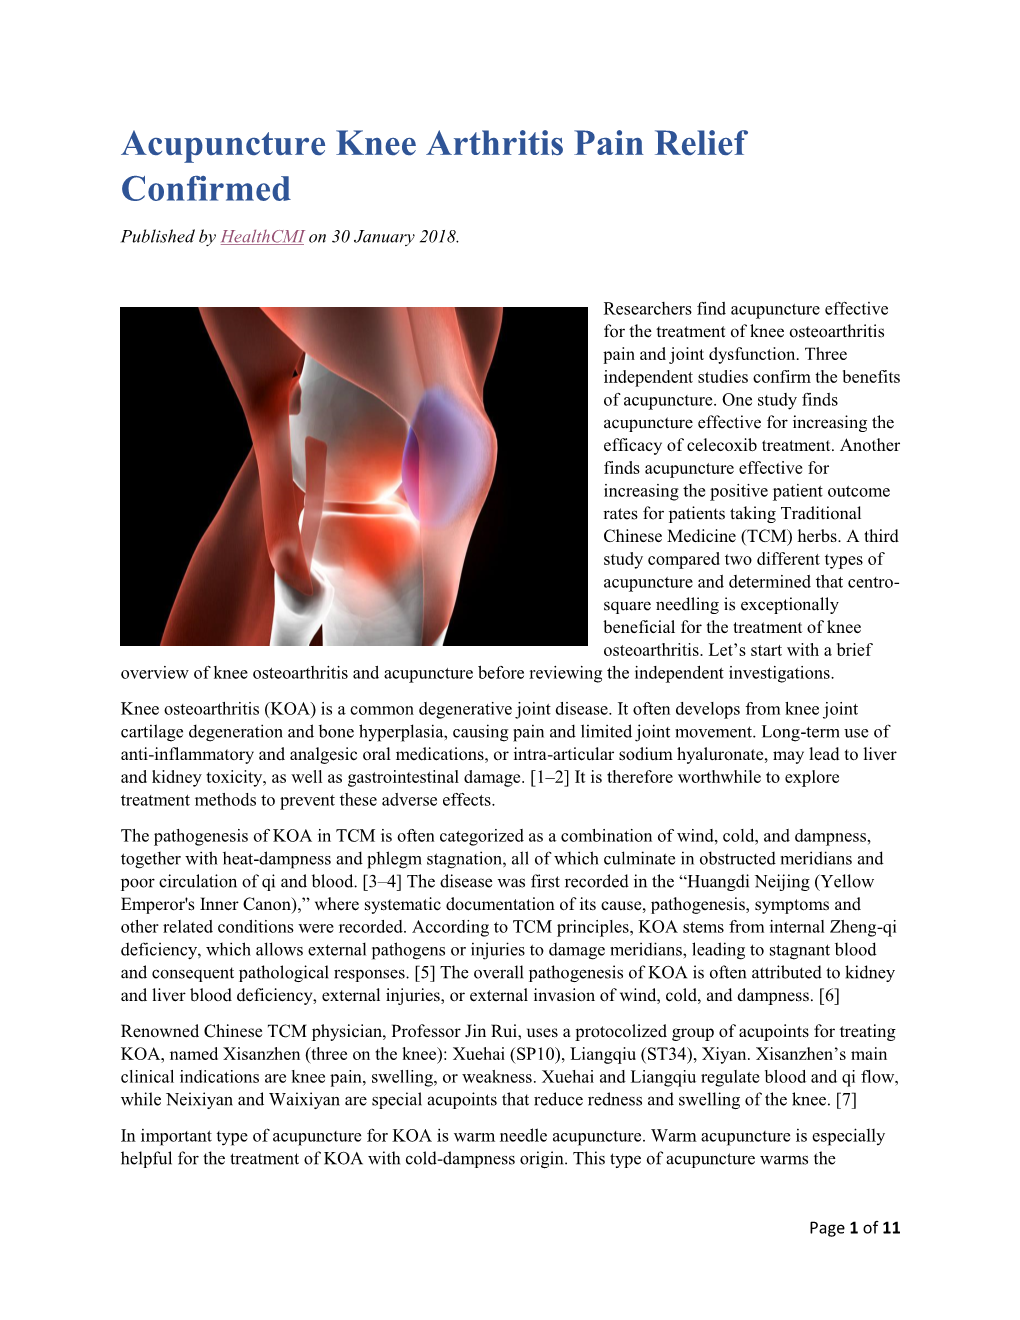 Acupuncture Knee Arthritis Pain Relief Confirmed